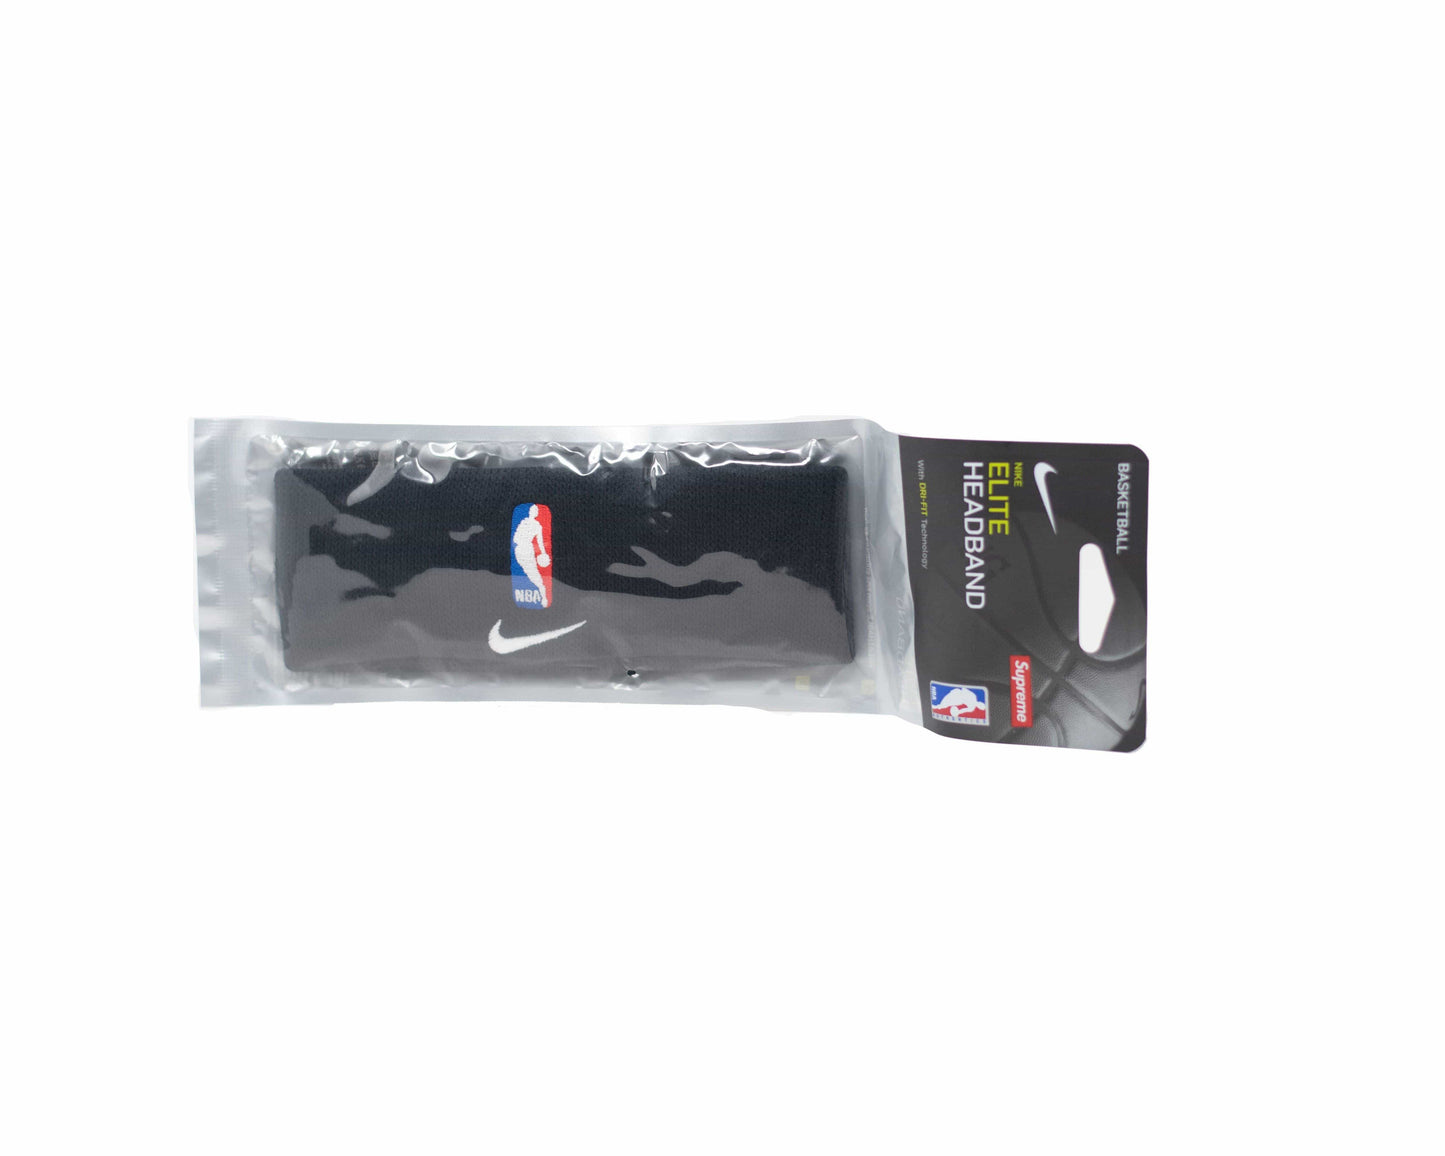 Supreme Nike NBA Headband Black - Image 09 - Only at www.BallersClubKickz.com - This Supreme Nike NBA 'Headband Black' was featured in SS19.